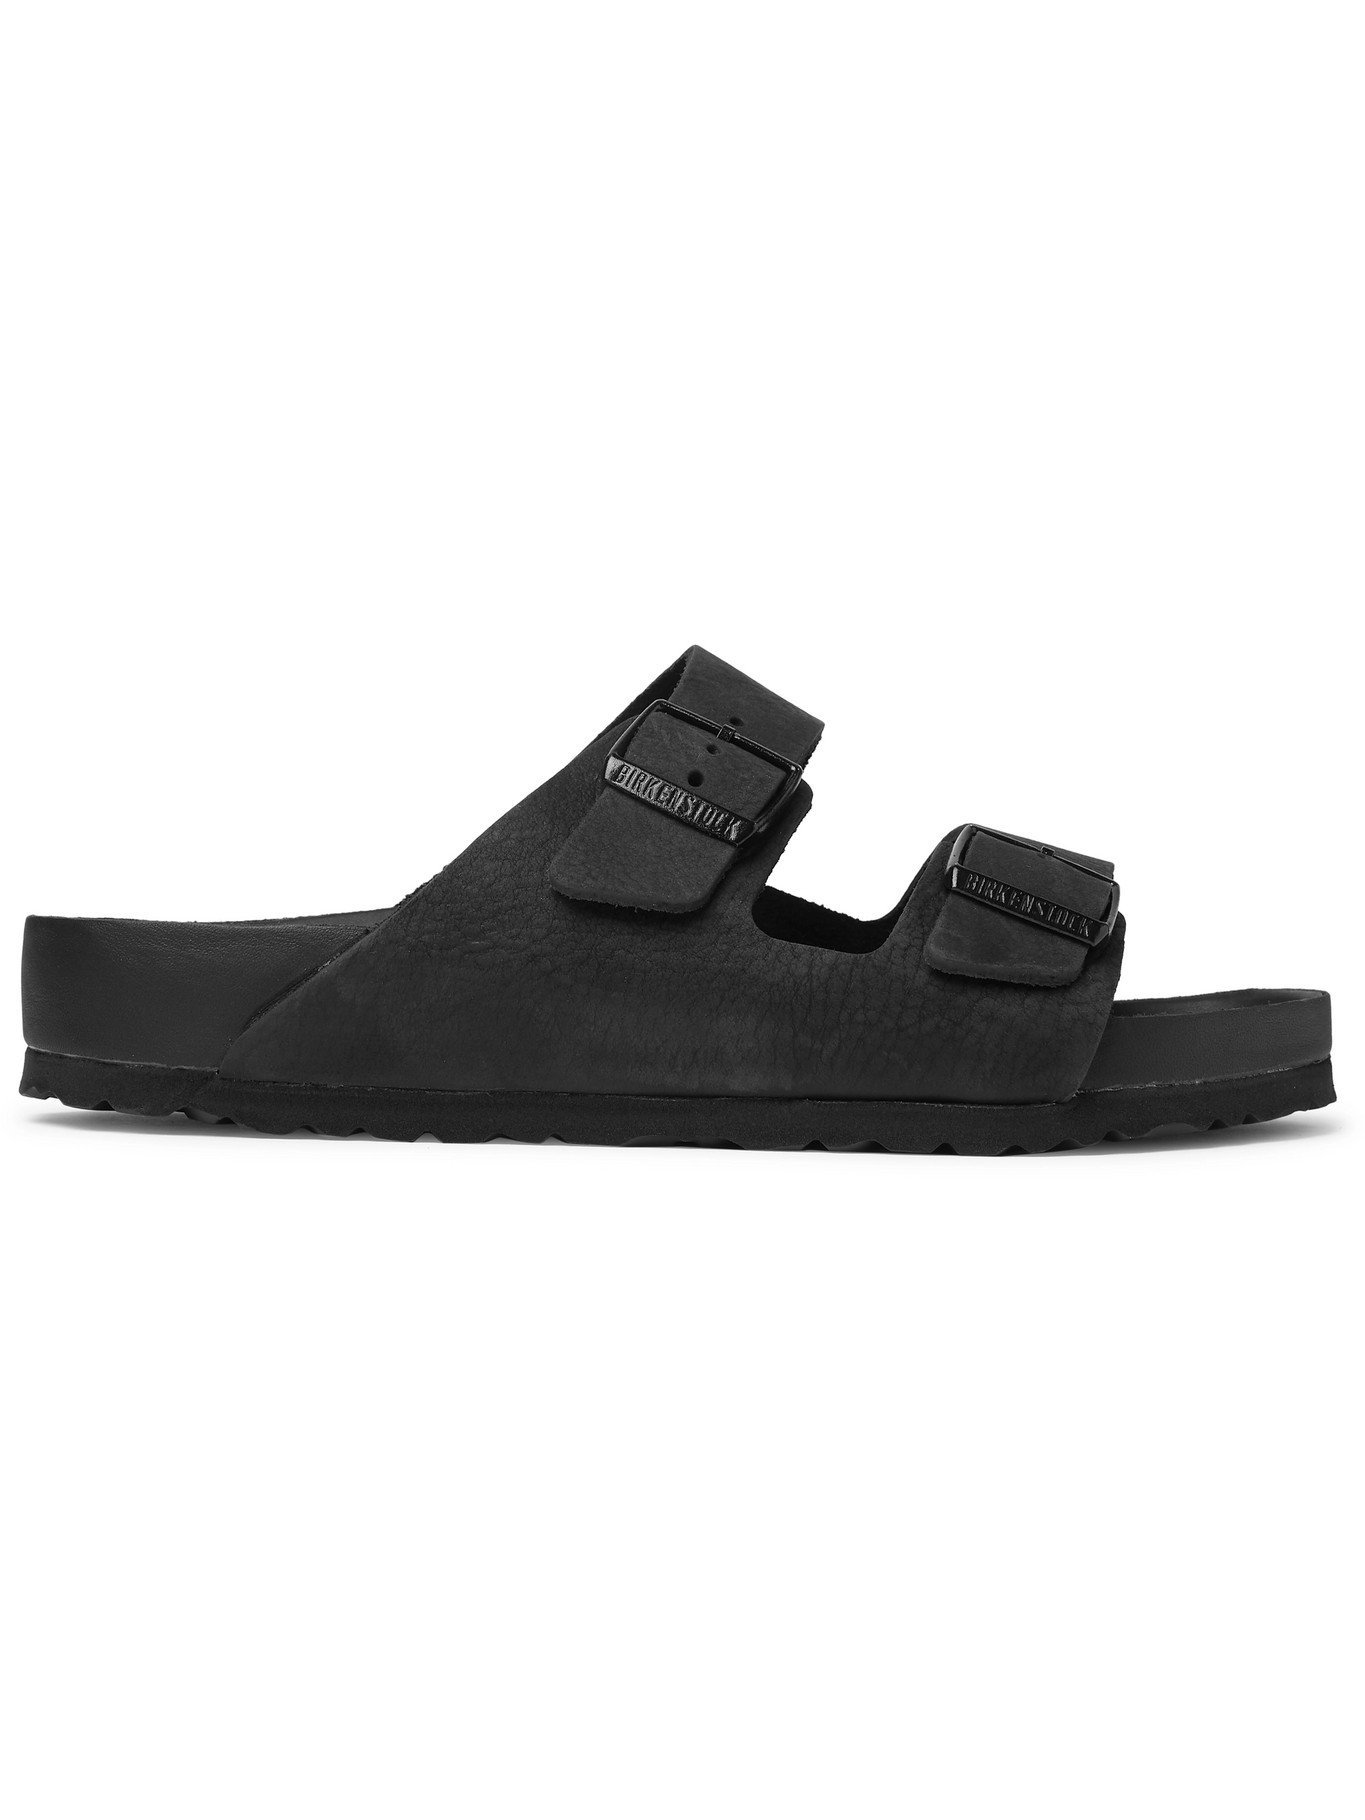 BIRKENSTOCK - Arizona Leather Sandals - Black - EU